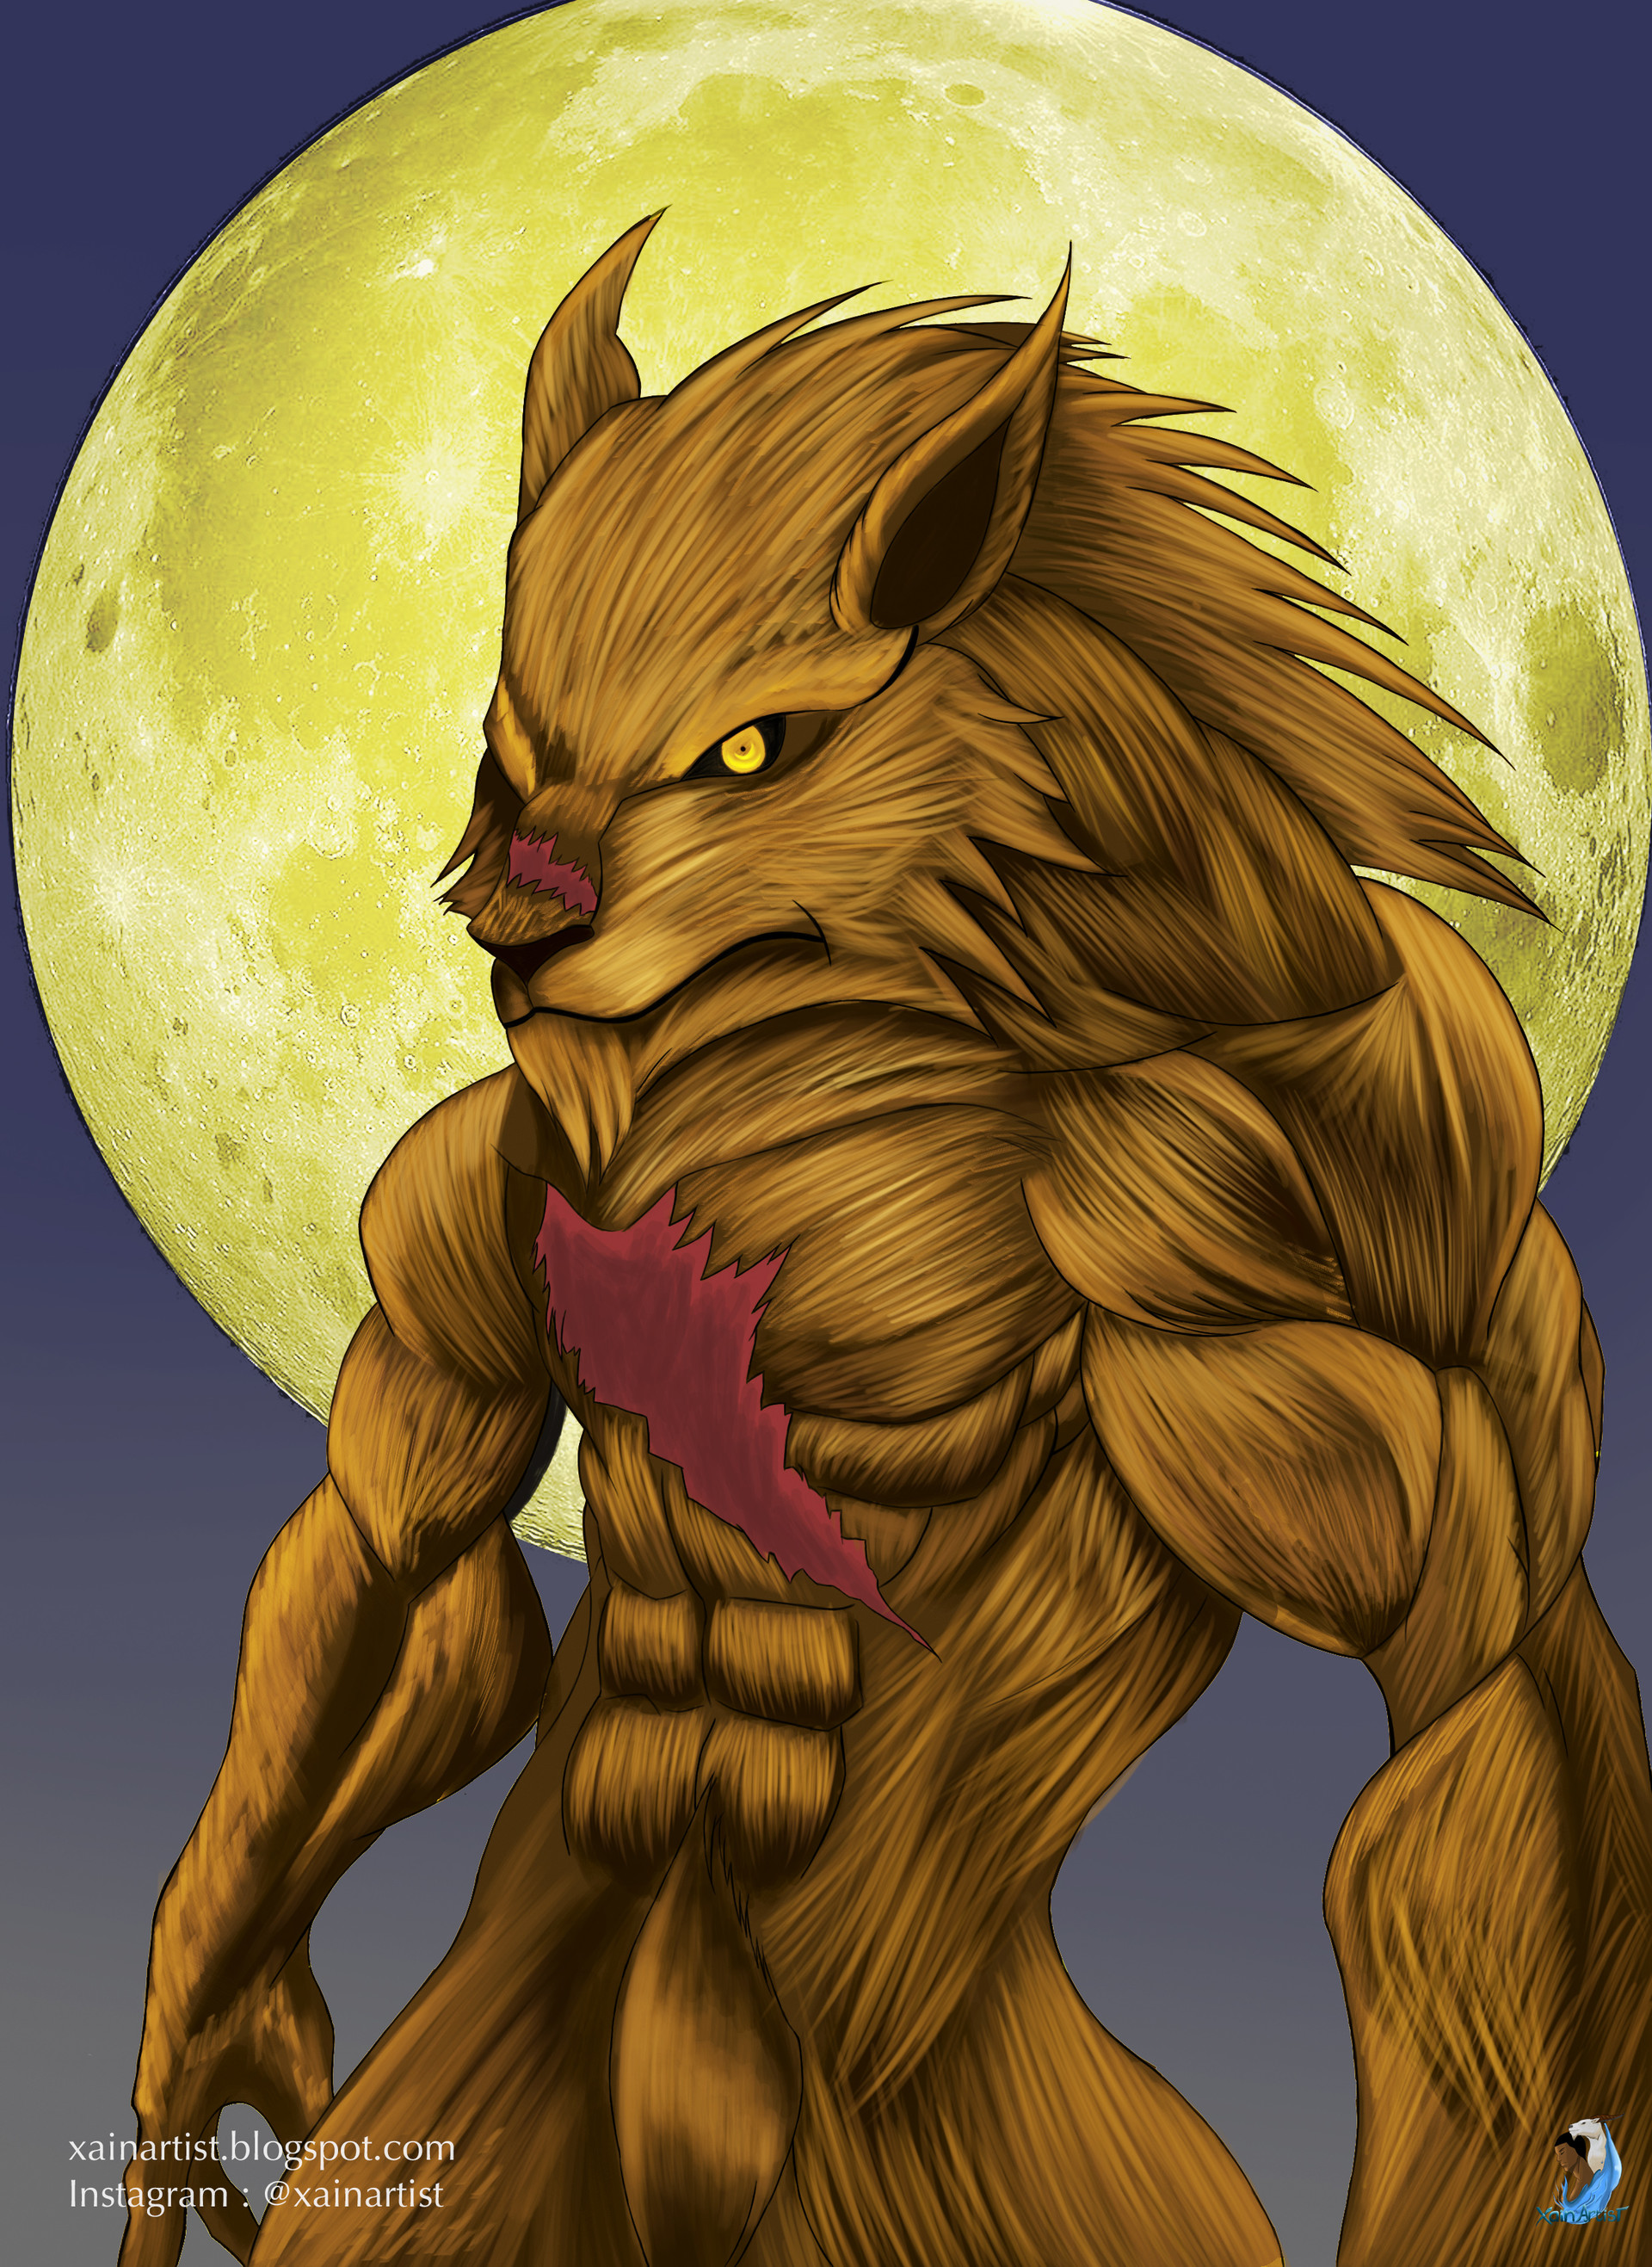 ArtStation - Night of the werewolf